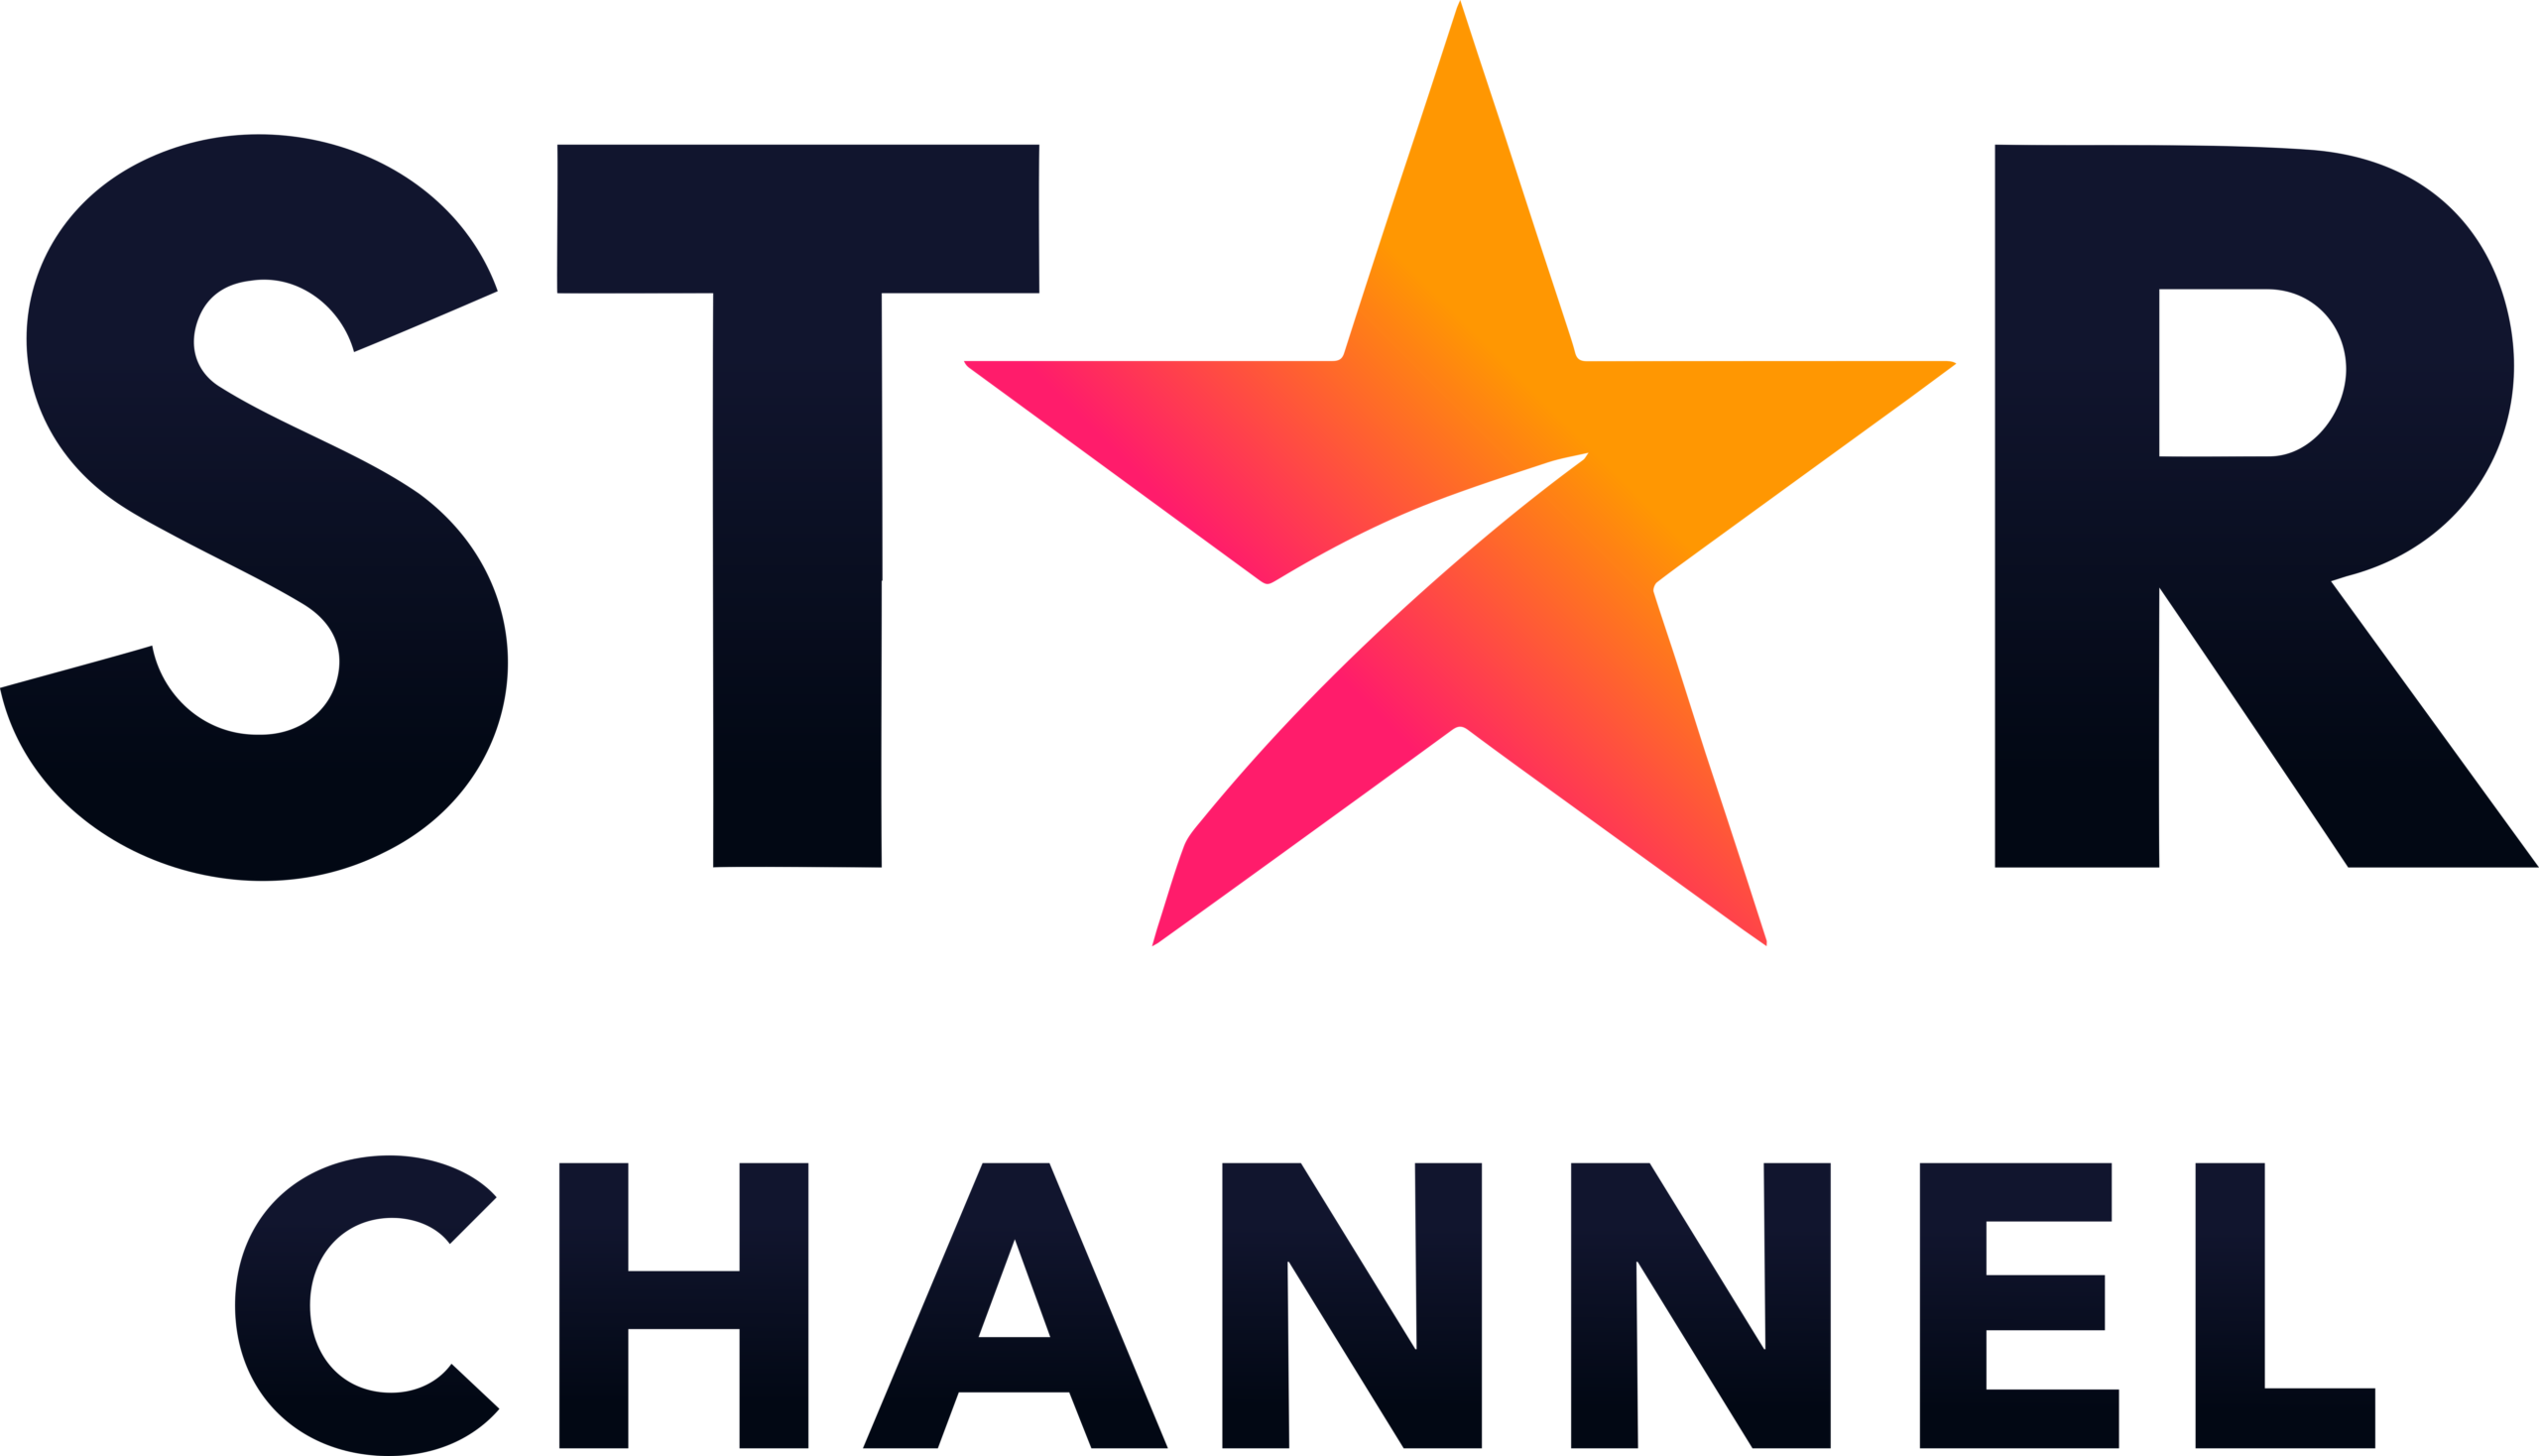 Star_Channel_2021